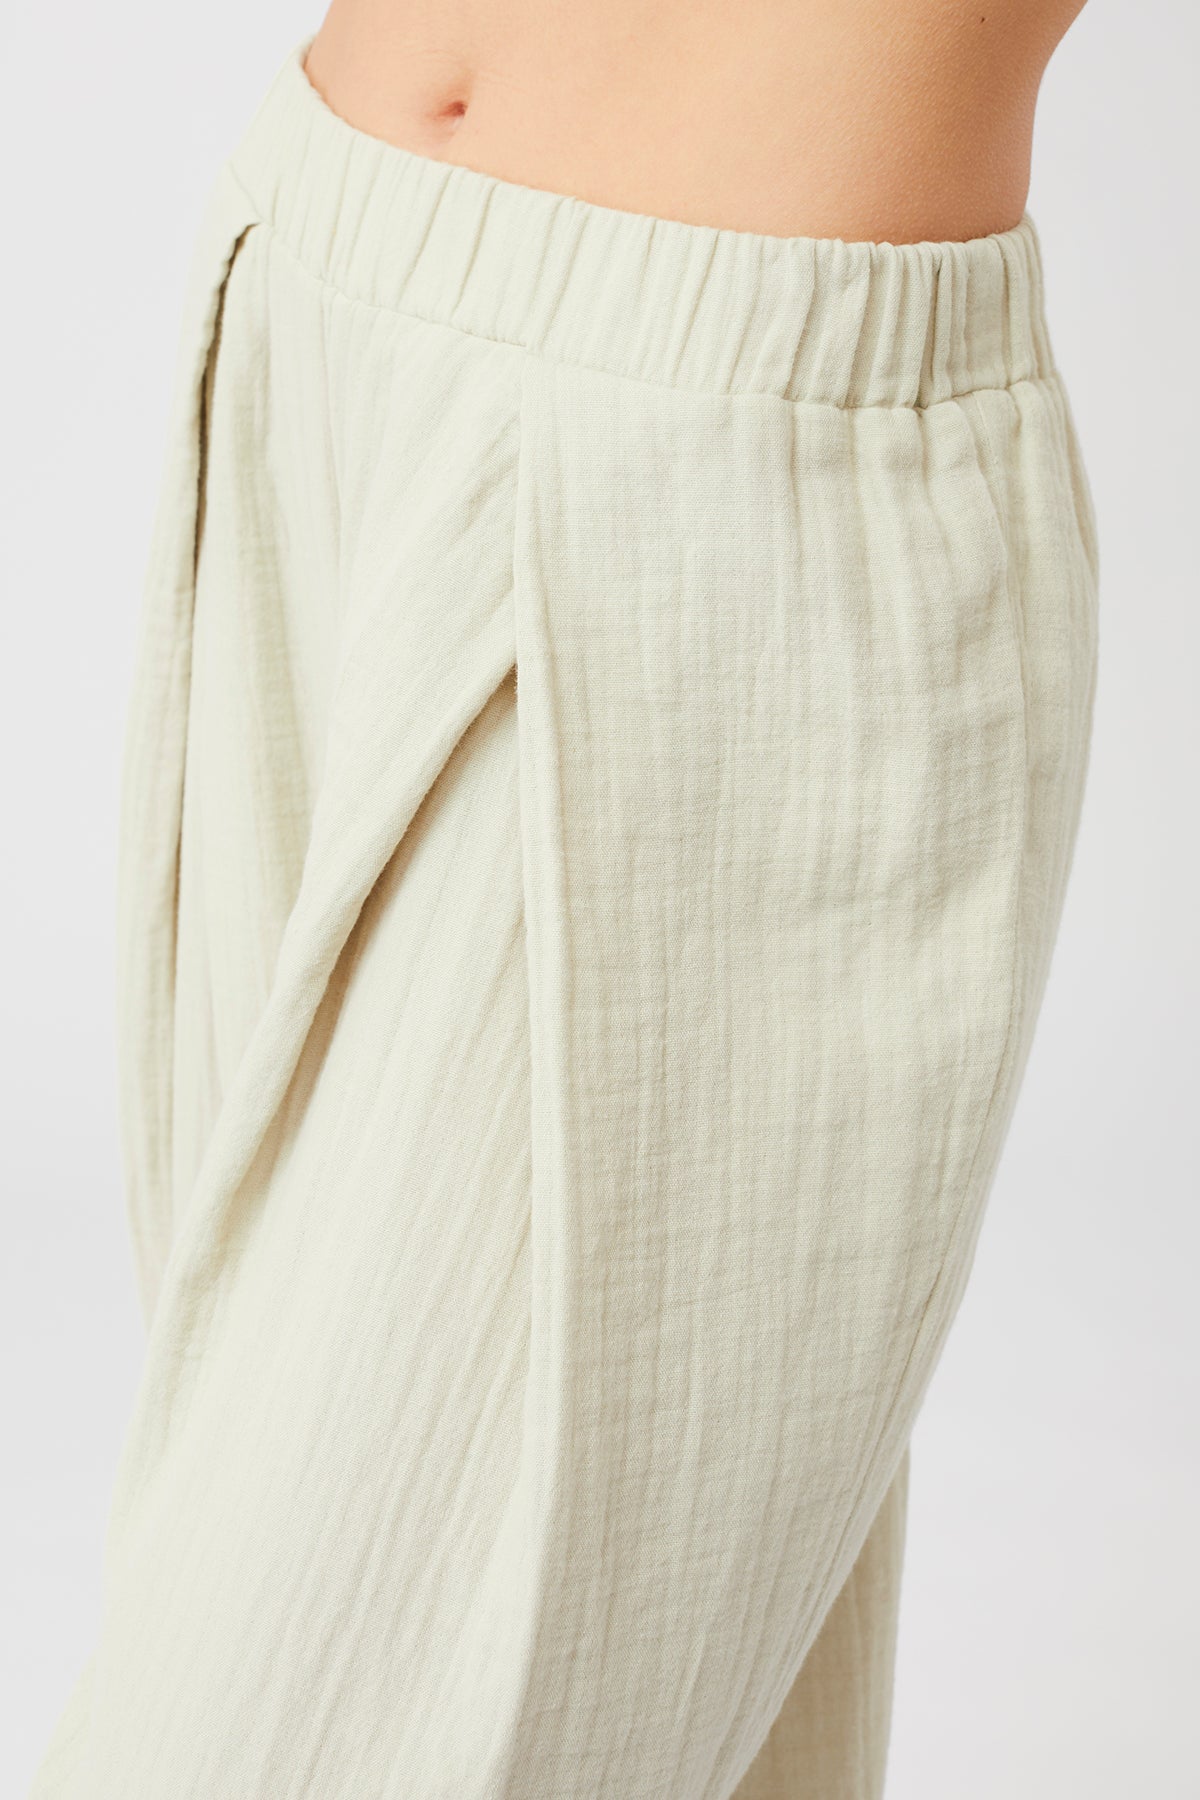 Mandala Yoga Pants Grün Detail - Nomad Pants